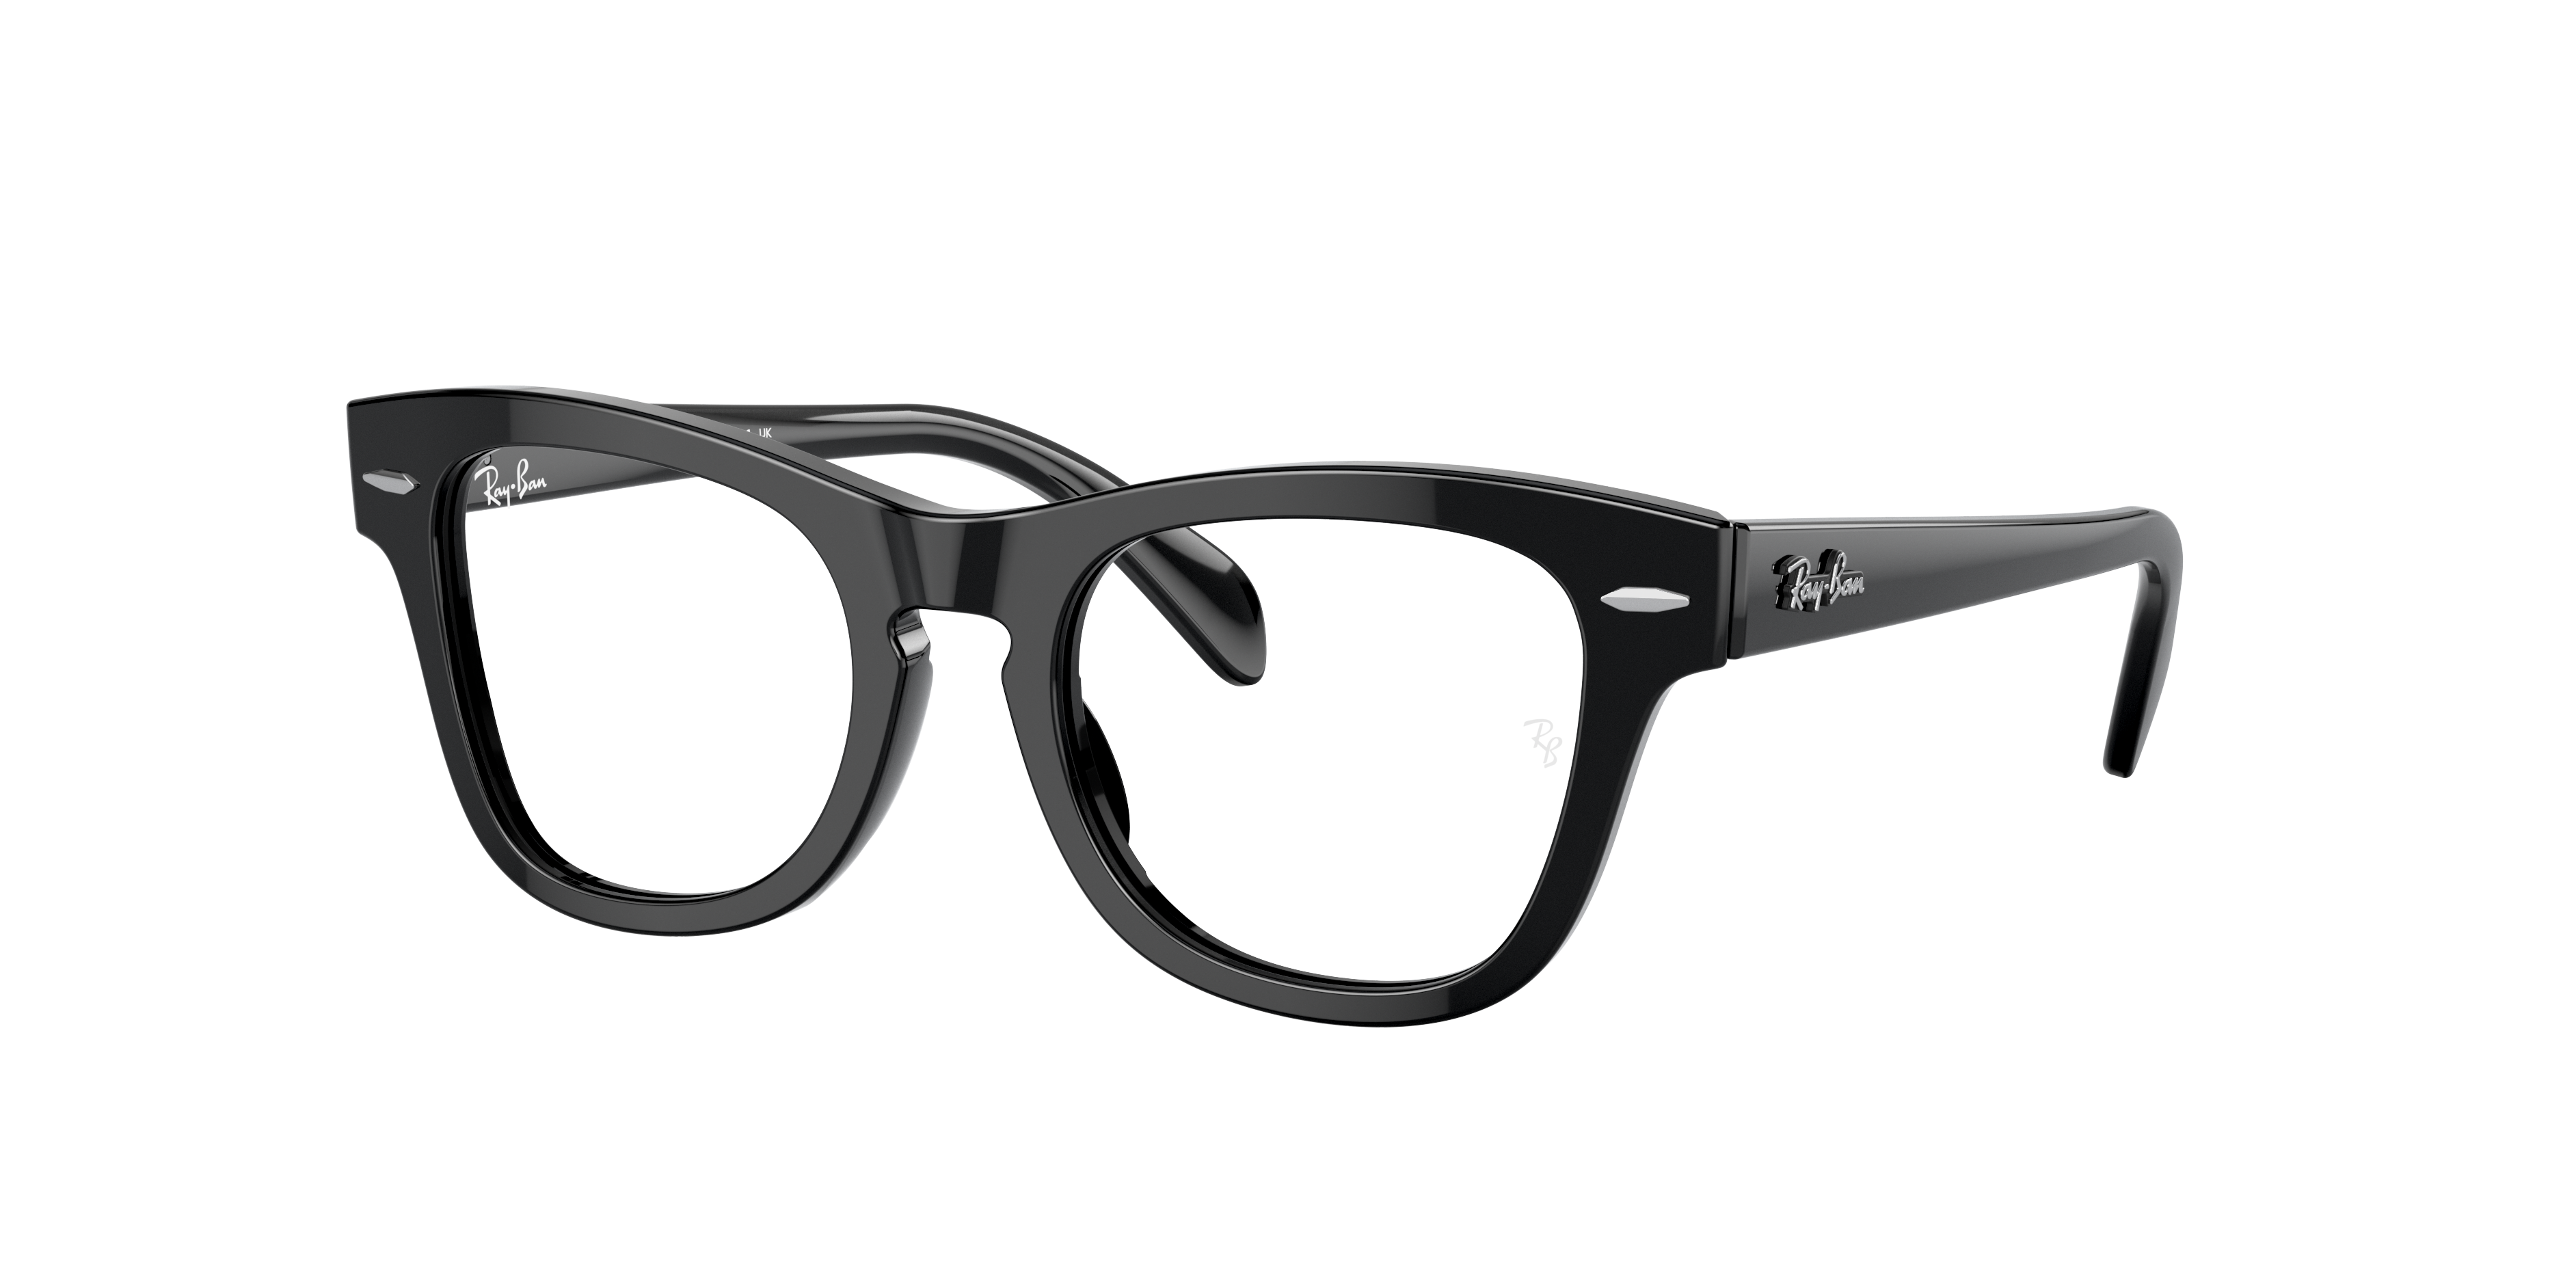 Rb9707v Optics Kids Eyeglasses with Black Frame | Ray-Ban®